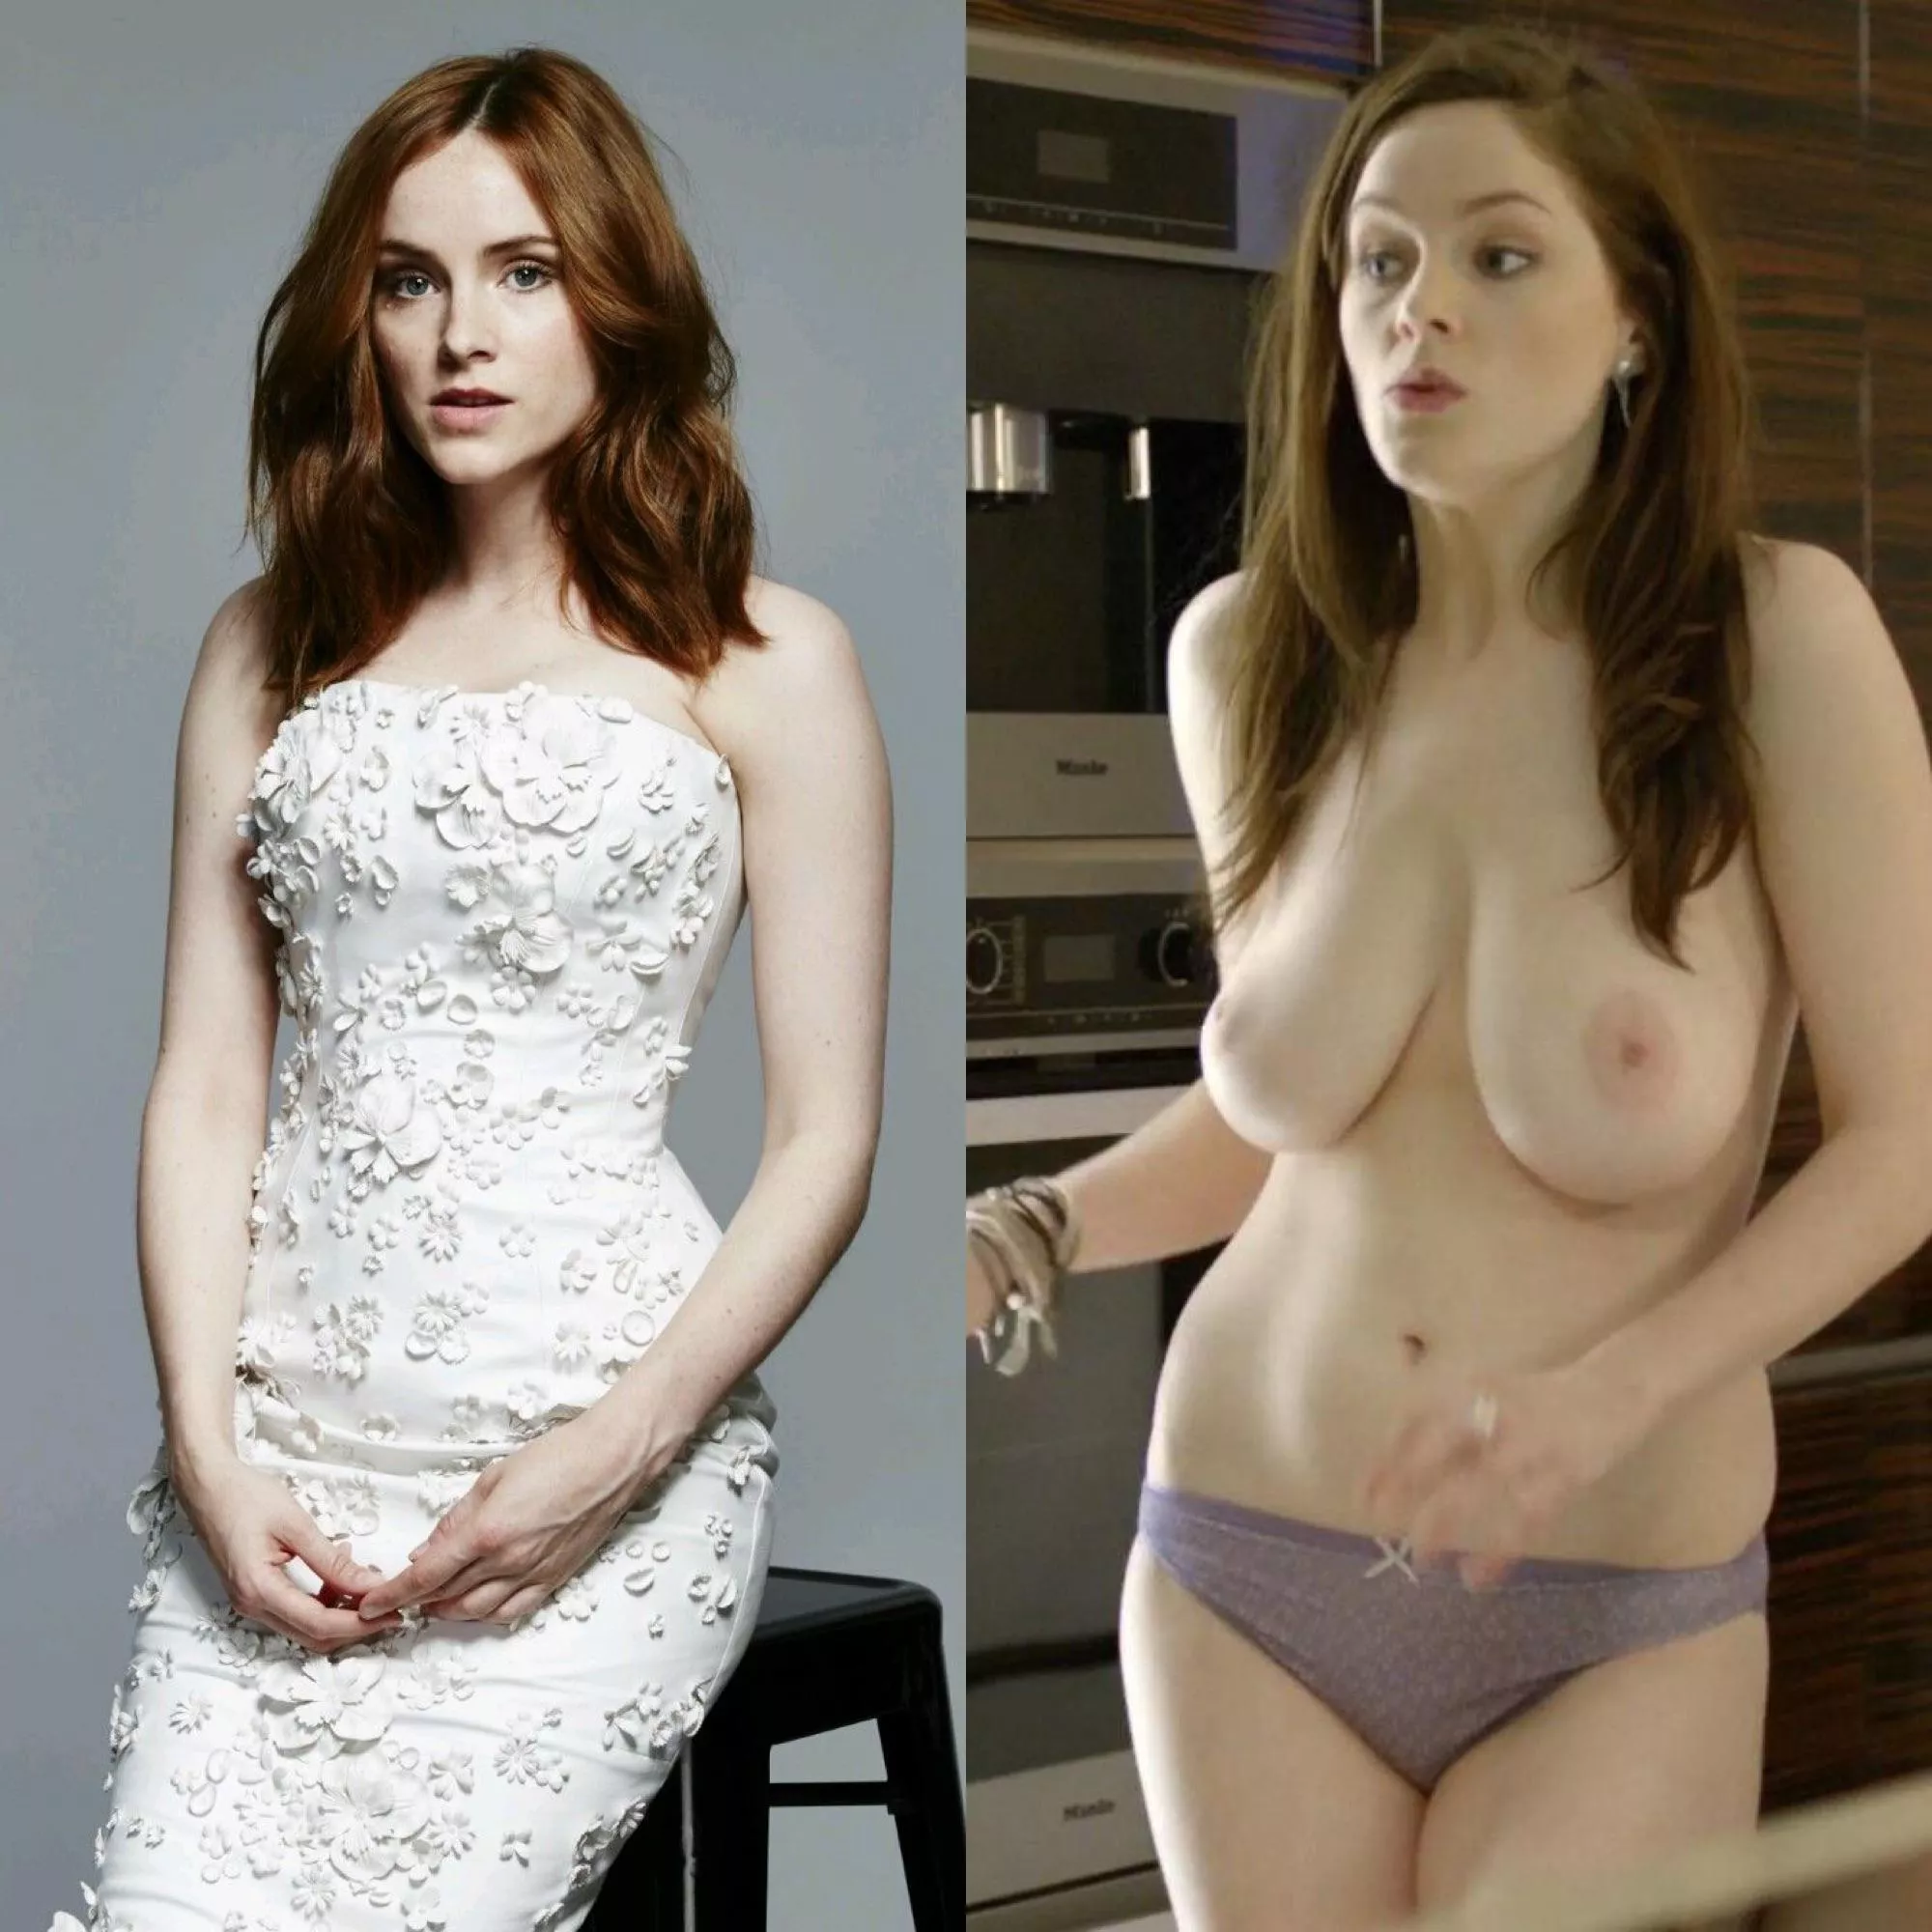 Sophie rundle Nude Lesbianpics.org